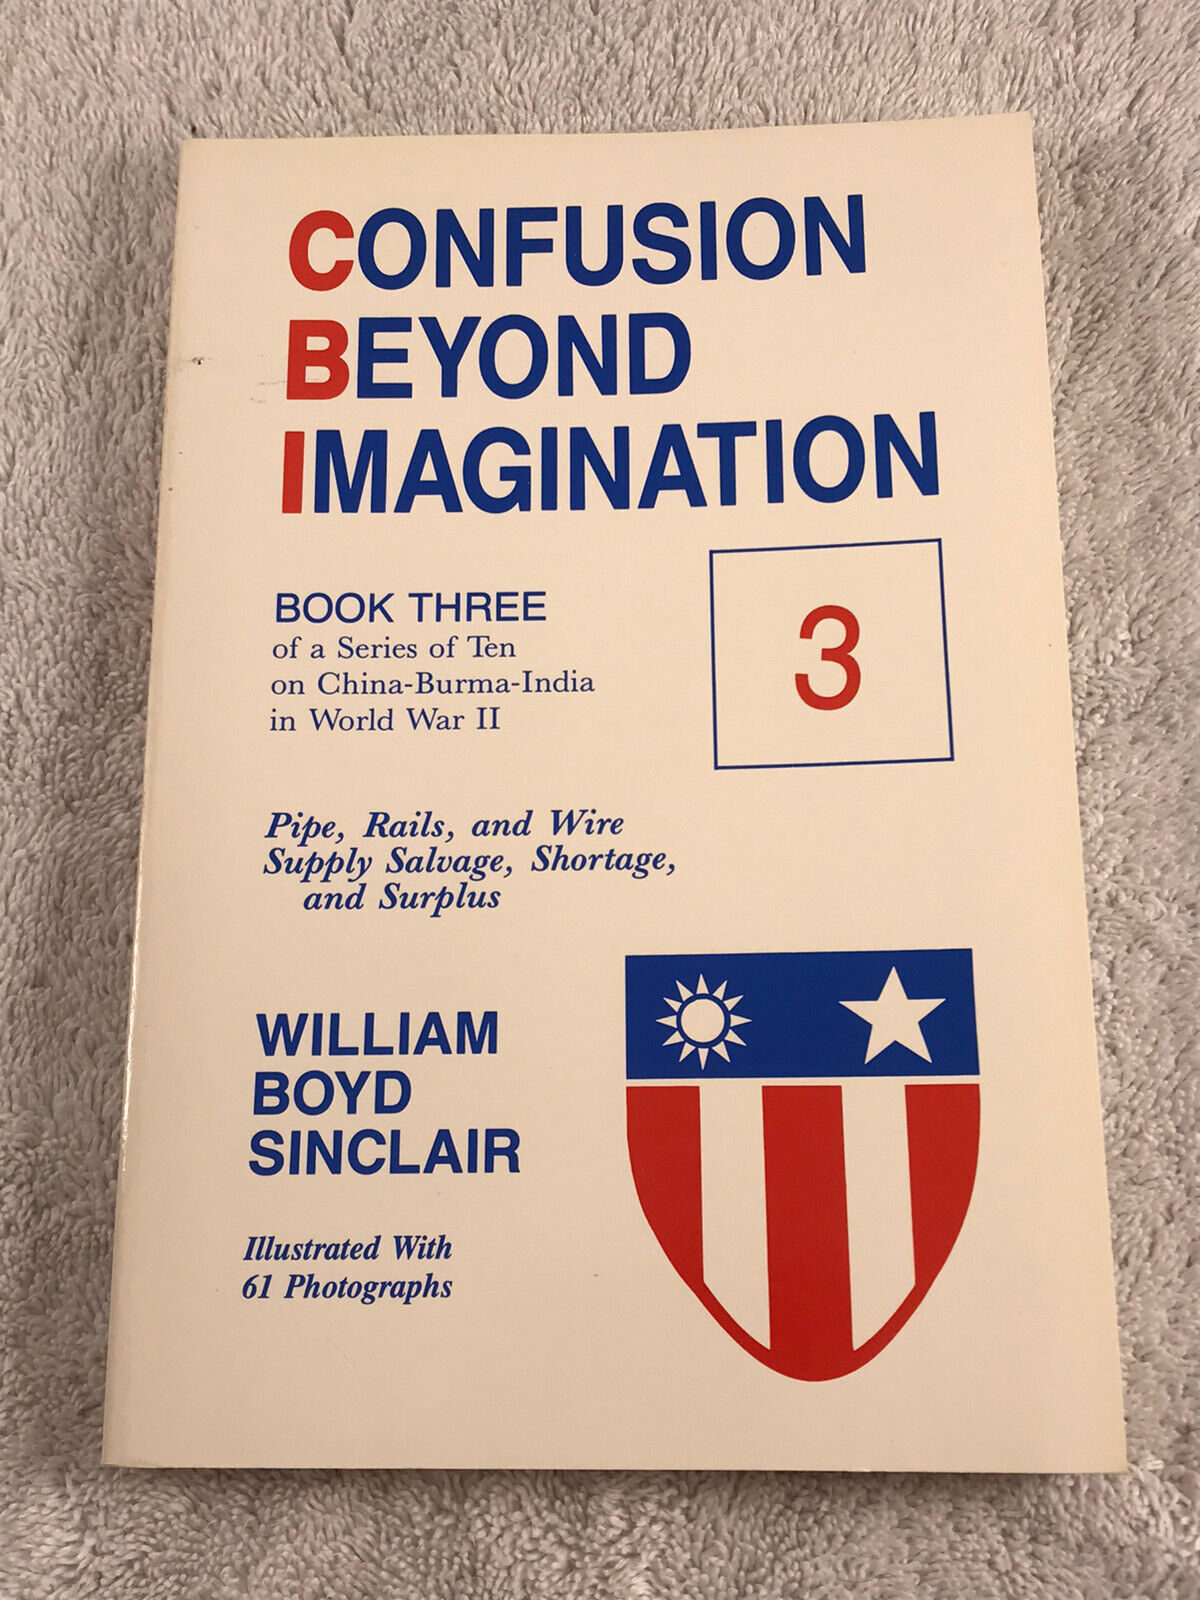 CONFUSION BEYOND IMAGINATION BOOK 3 - WILLIAM BOYD SINCLAIR - CHINA BURMA INDIA